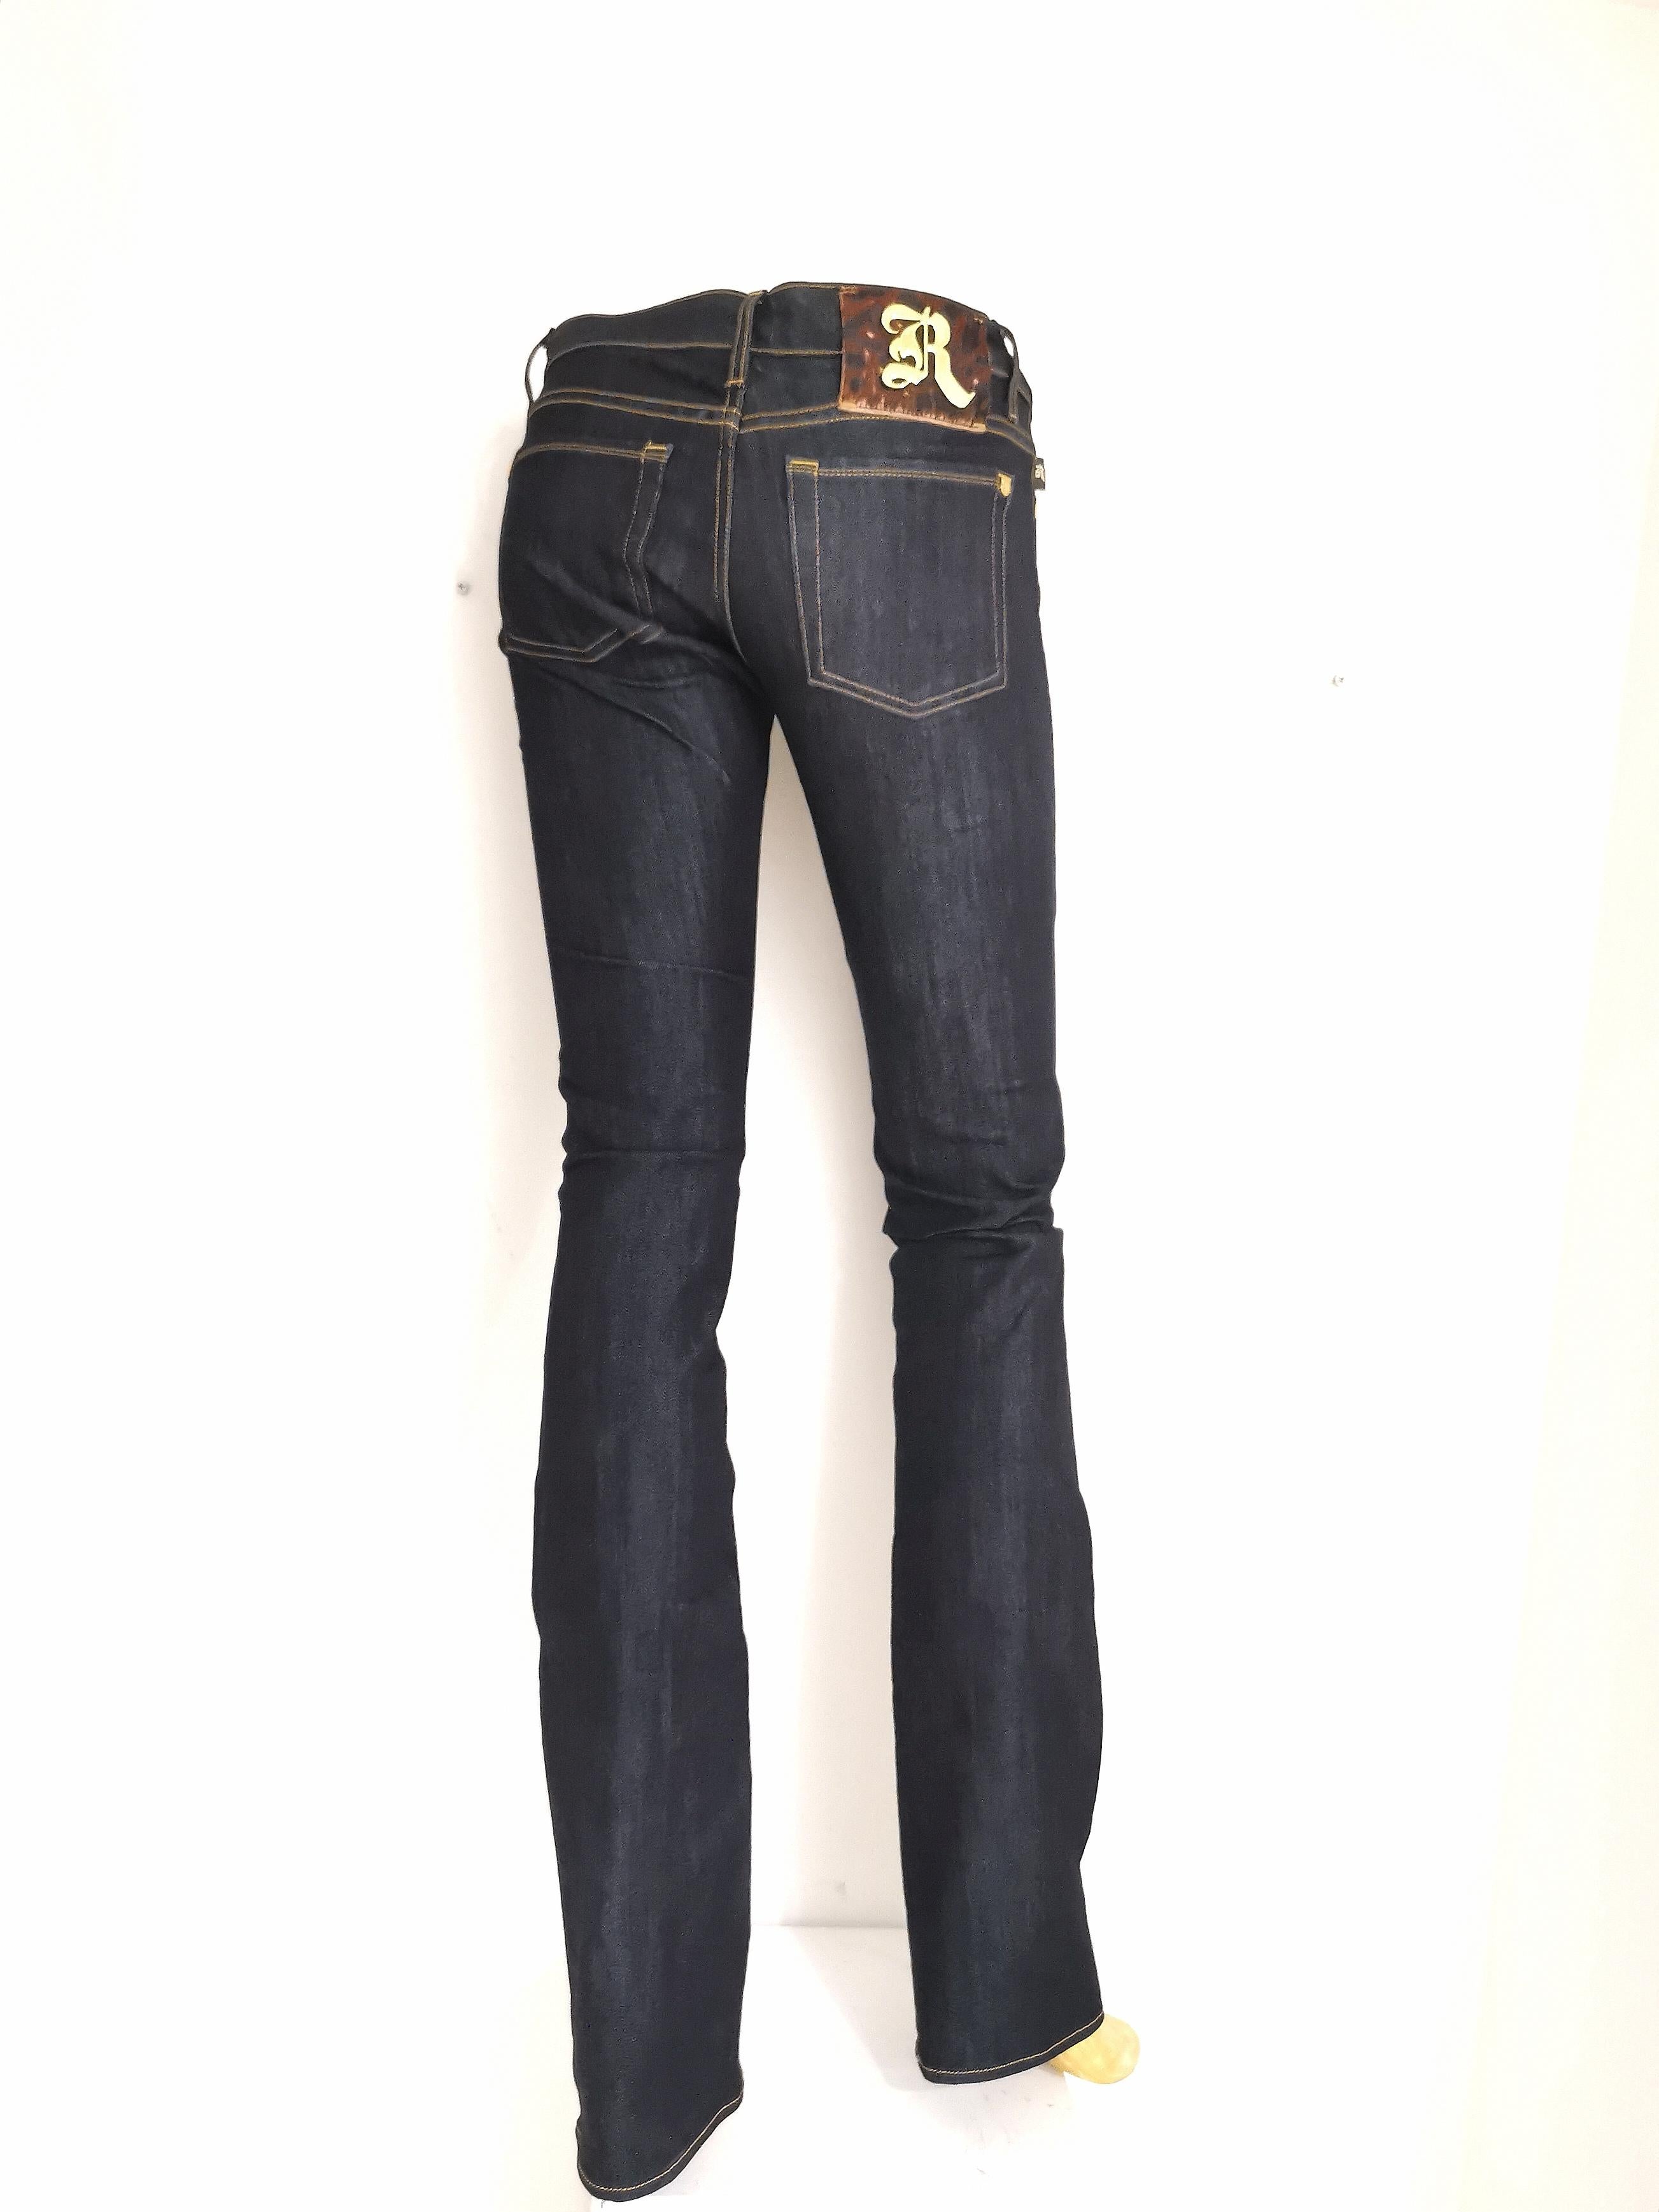 Rock and Republic skinny denim jeans
size 38